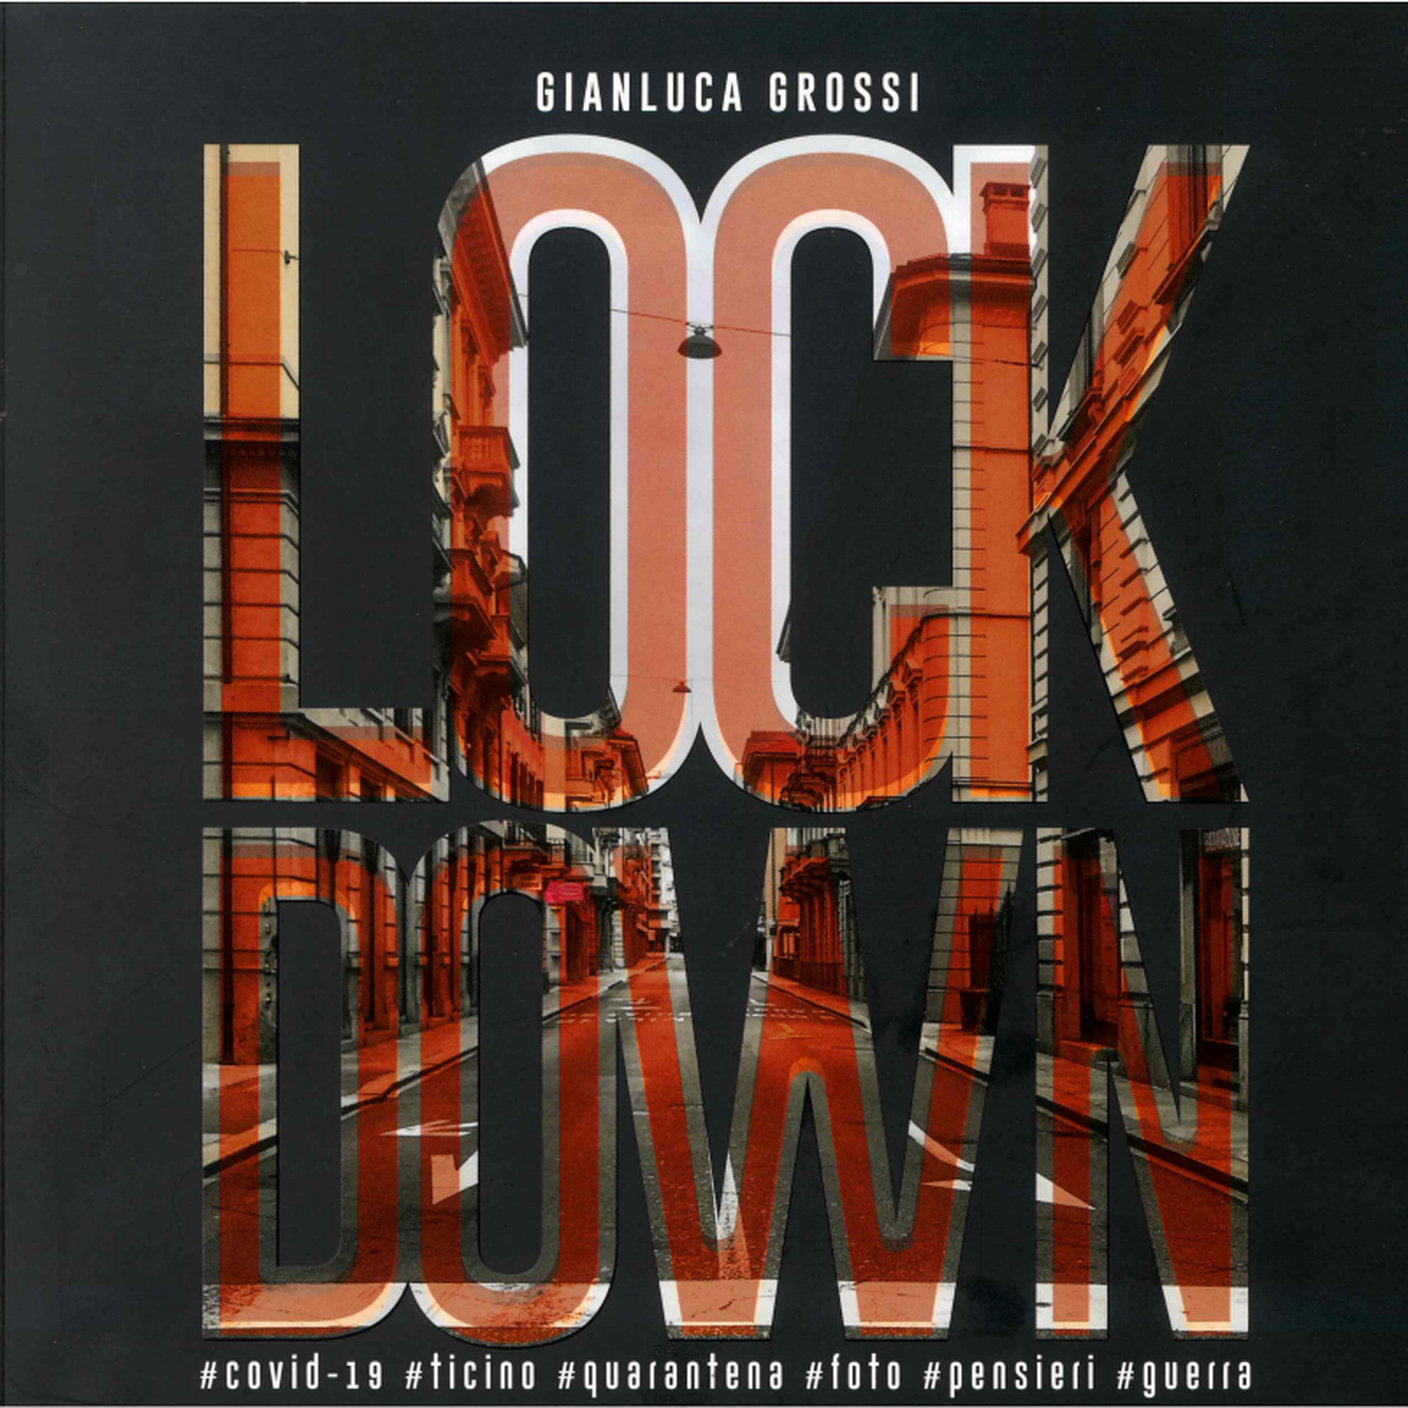 Gianluca Grossi, "Lockdown", Fontana Edizioni (dettaglio copertina)